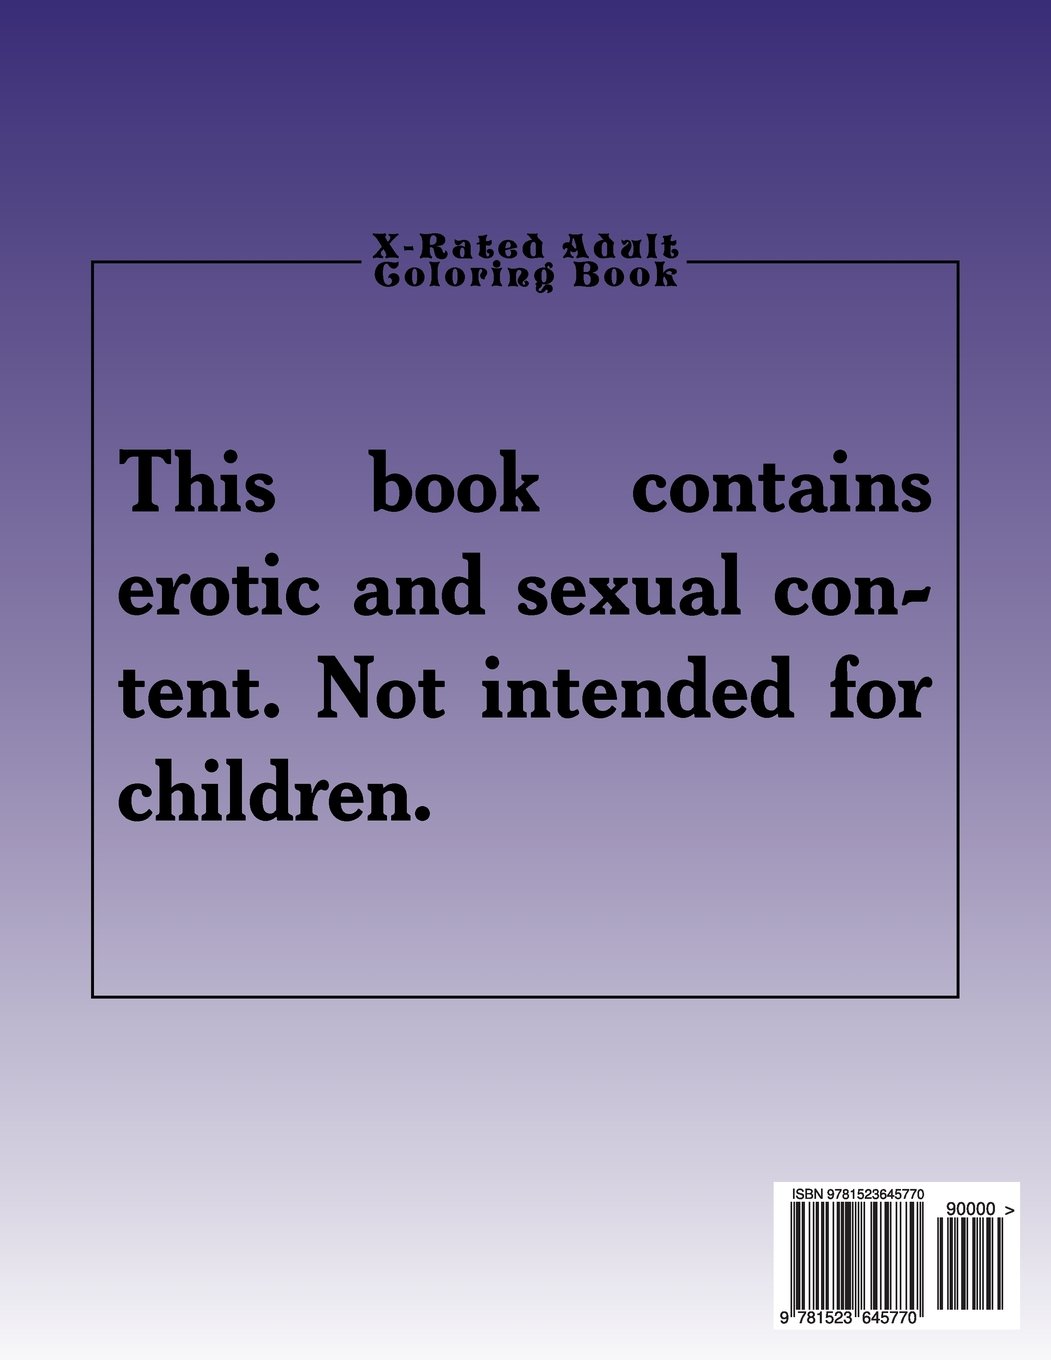 Xxx Rated Adult Coloring Books - X Rated Adult Coloring Book Adult Content Not Intended For Children Joni  Morton Books - XXXPicss.com